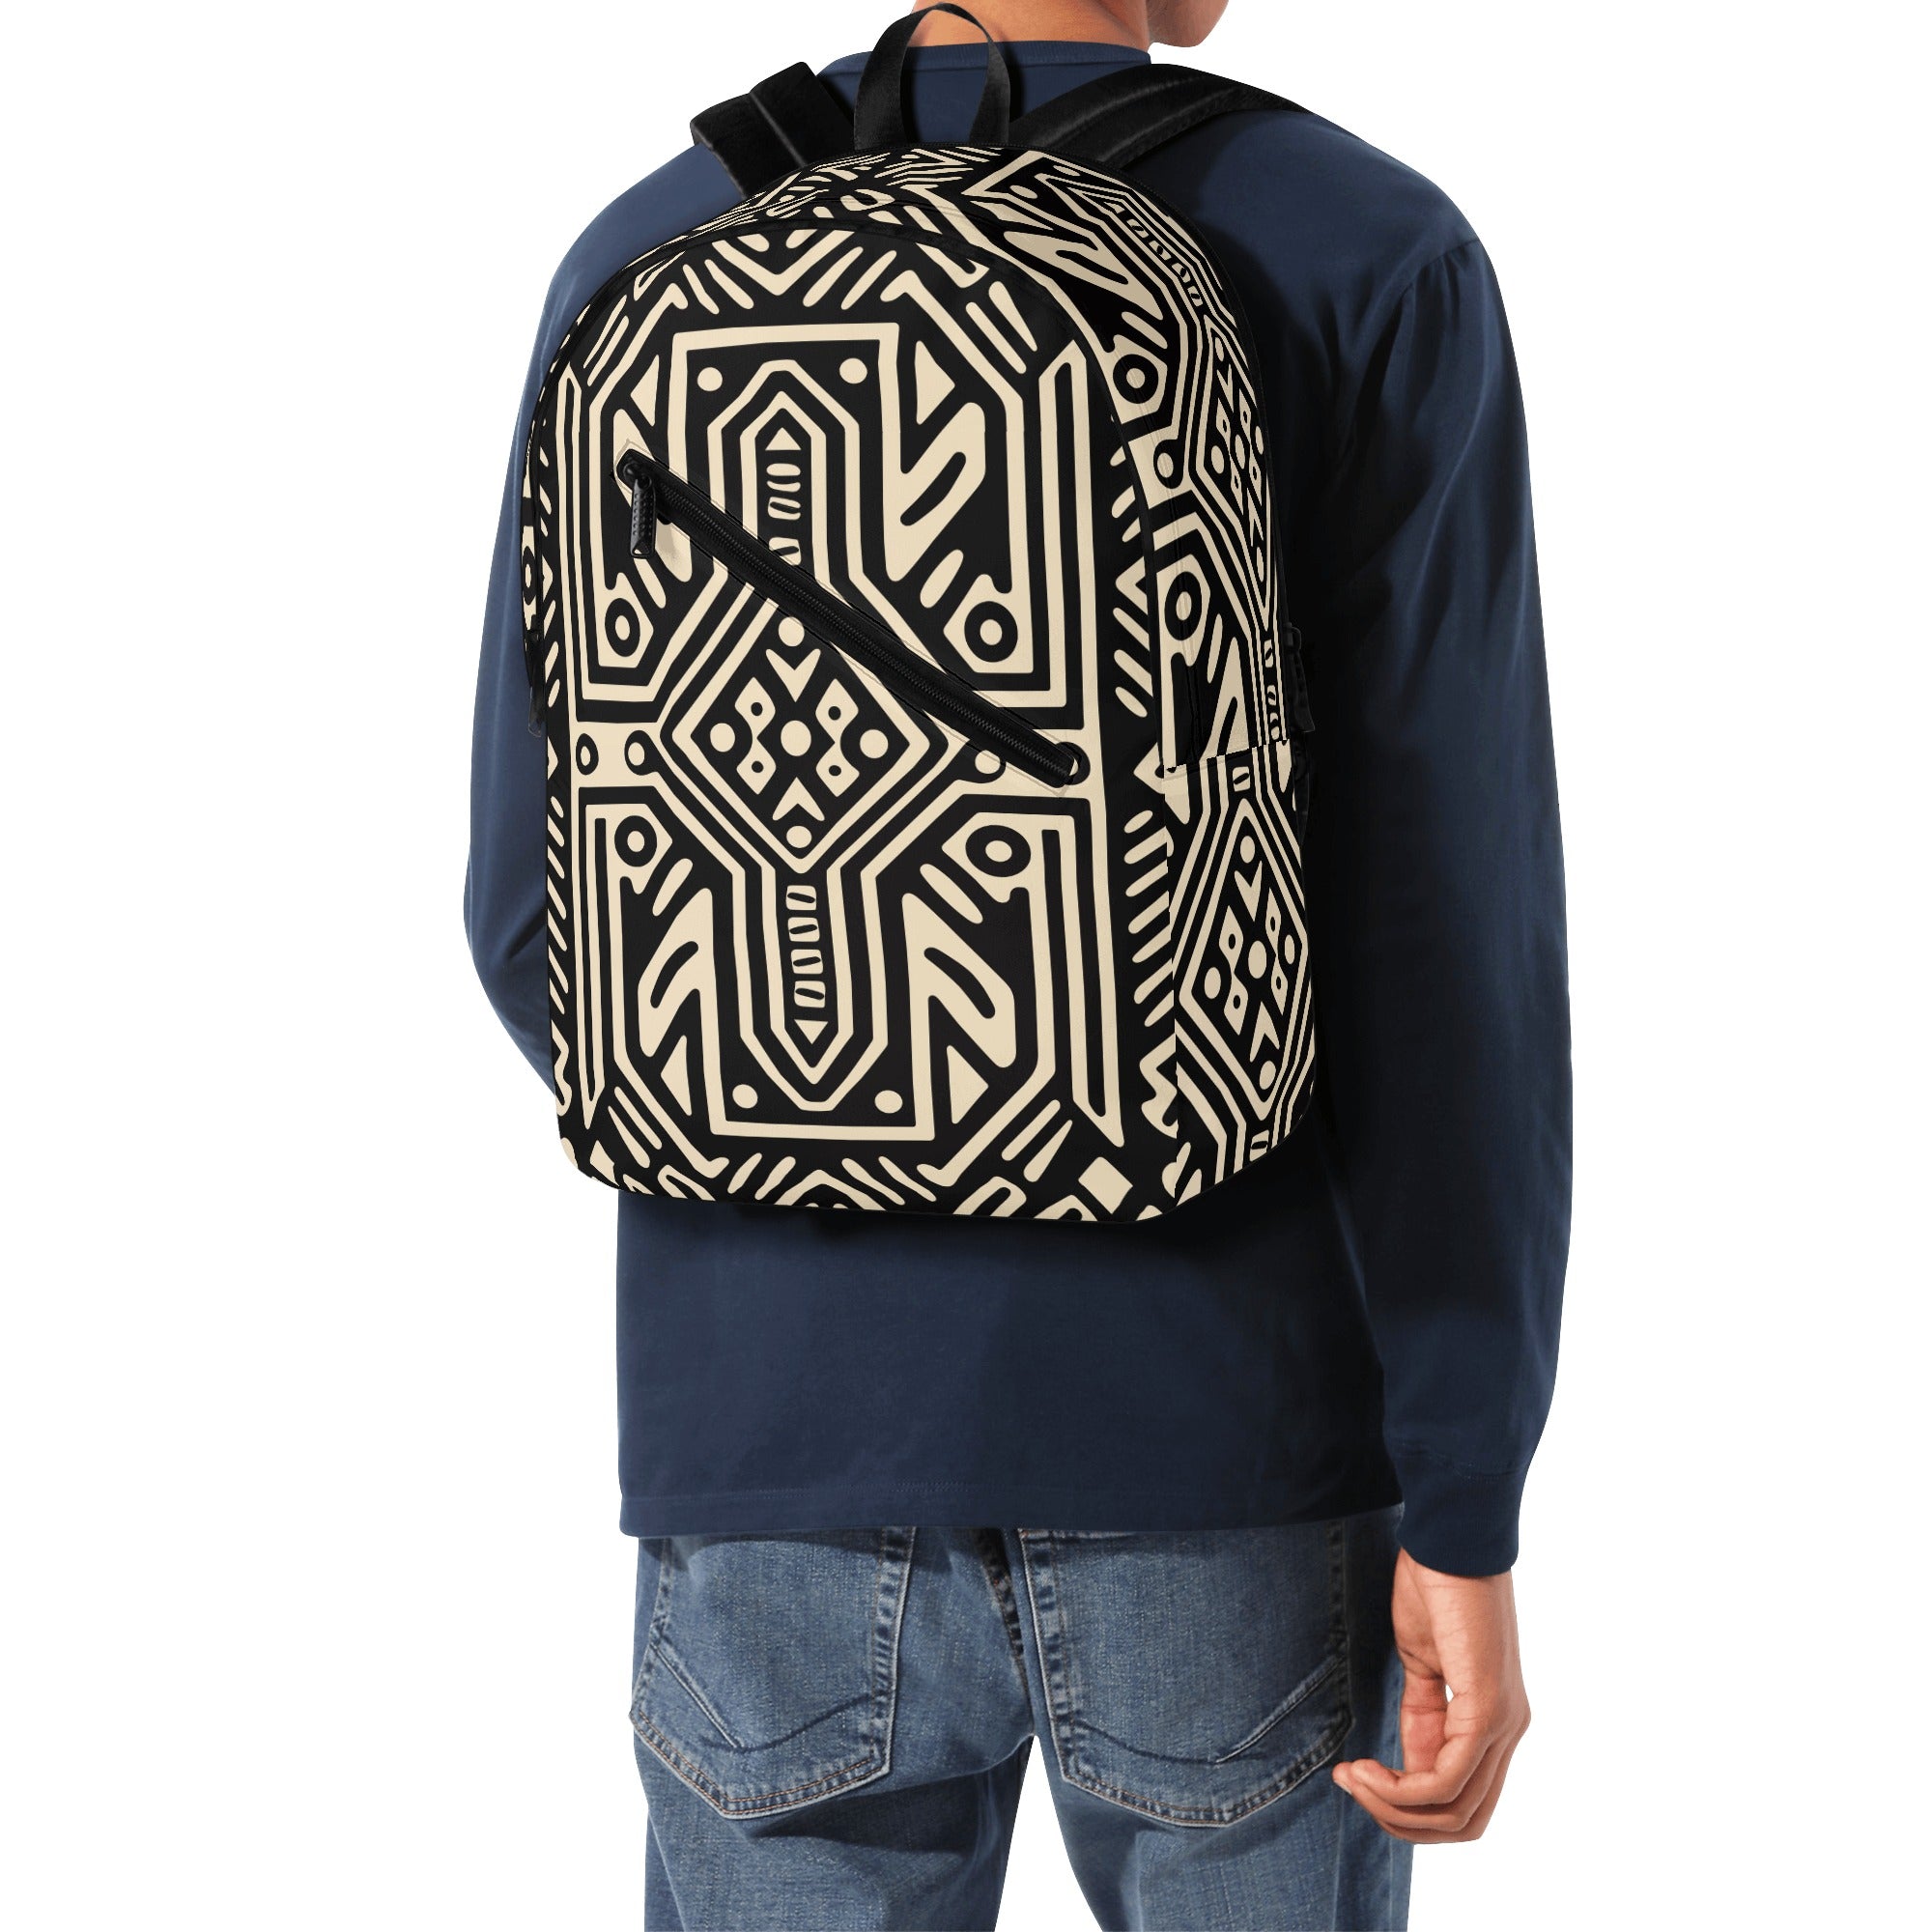 African Bogolan Pattern-Inspired Backpack